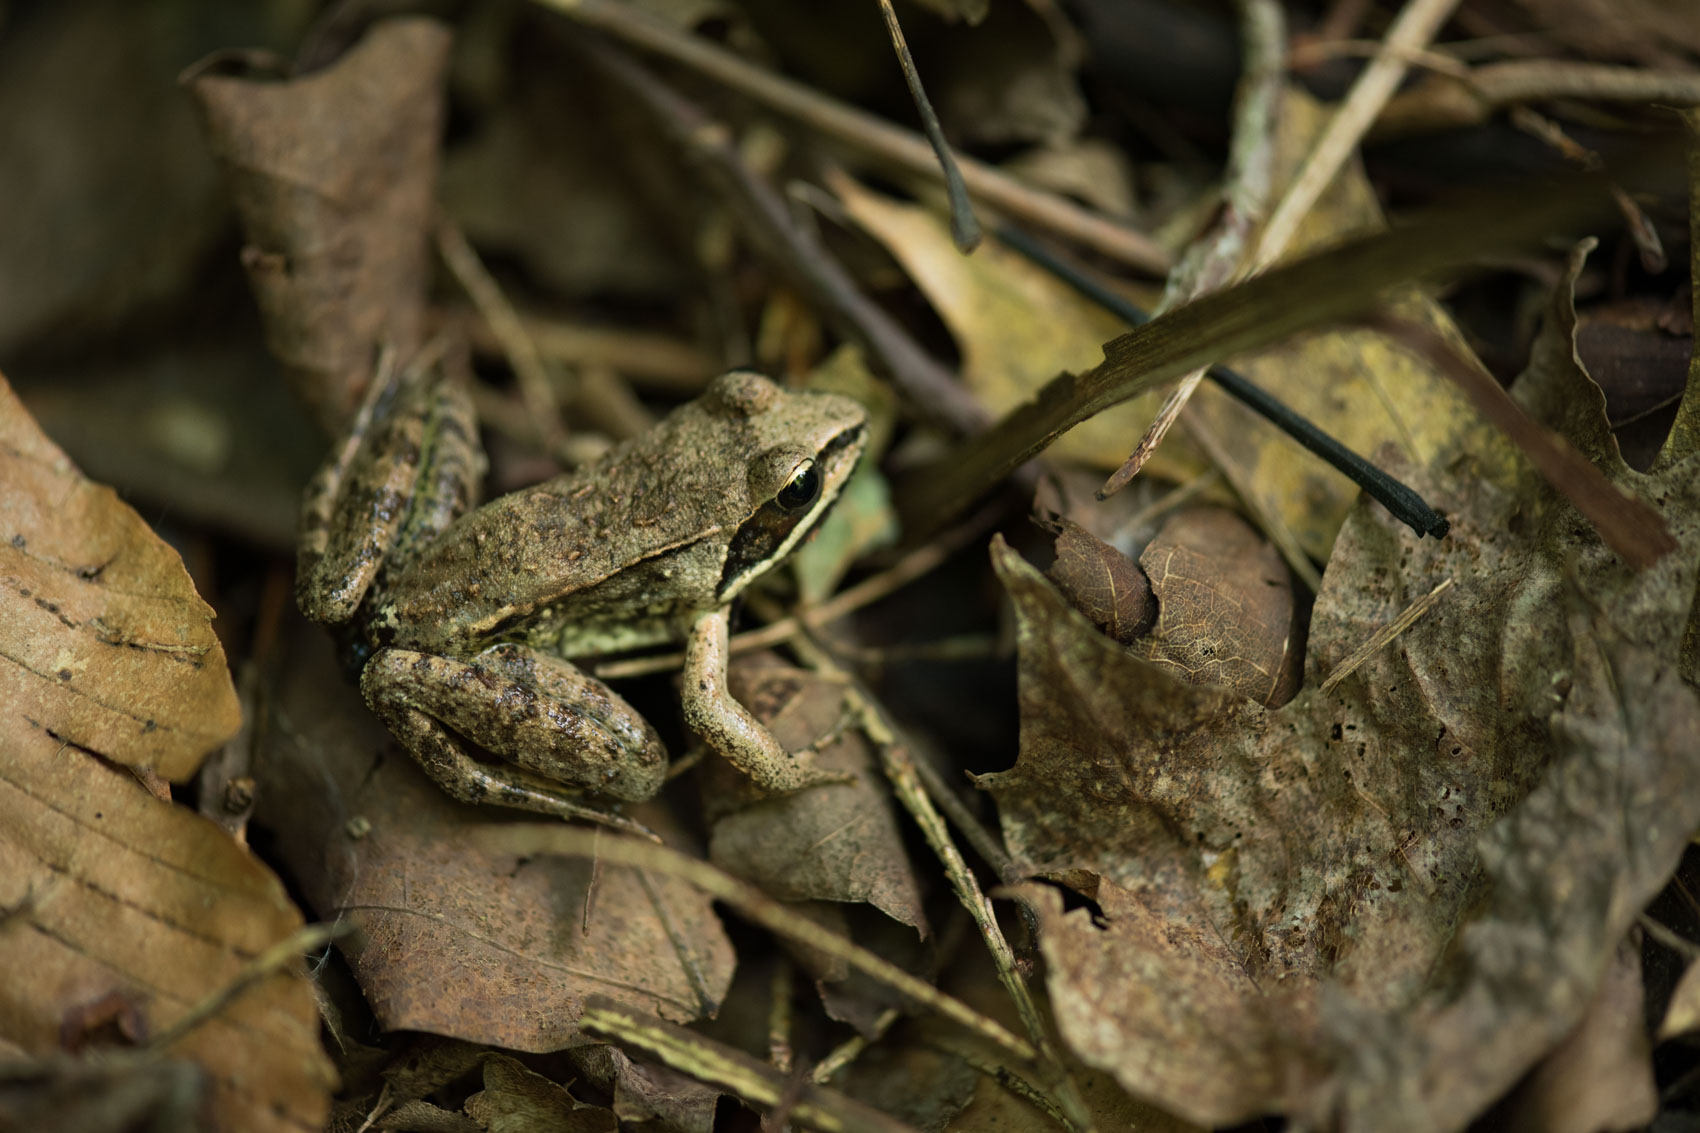 Wood frog camoflagued amongst leaves on ground 